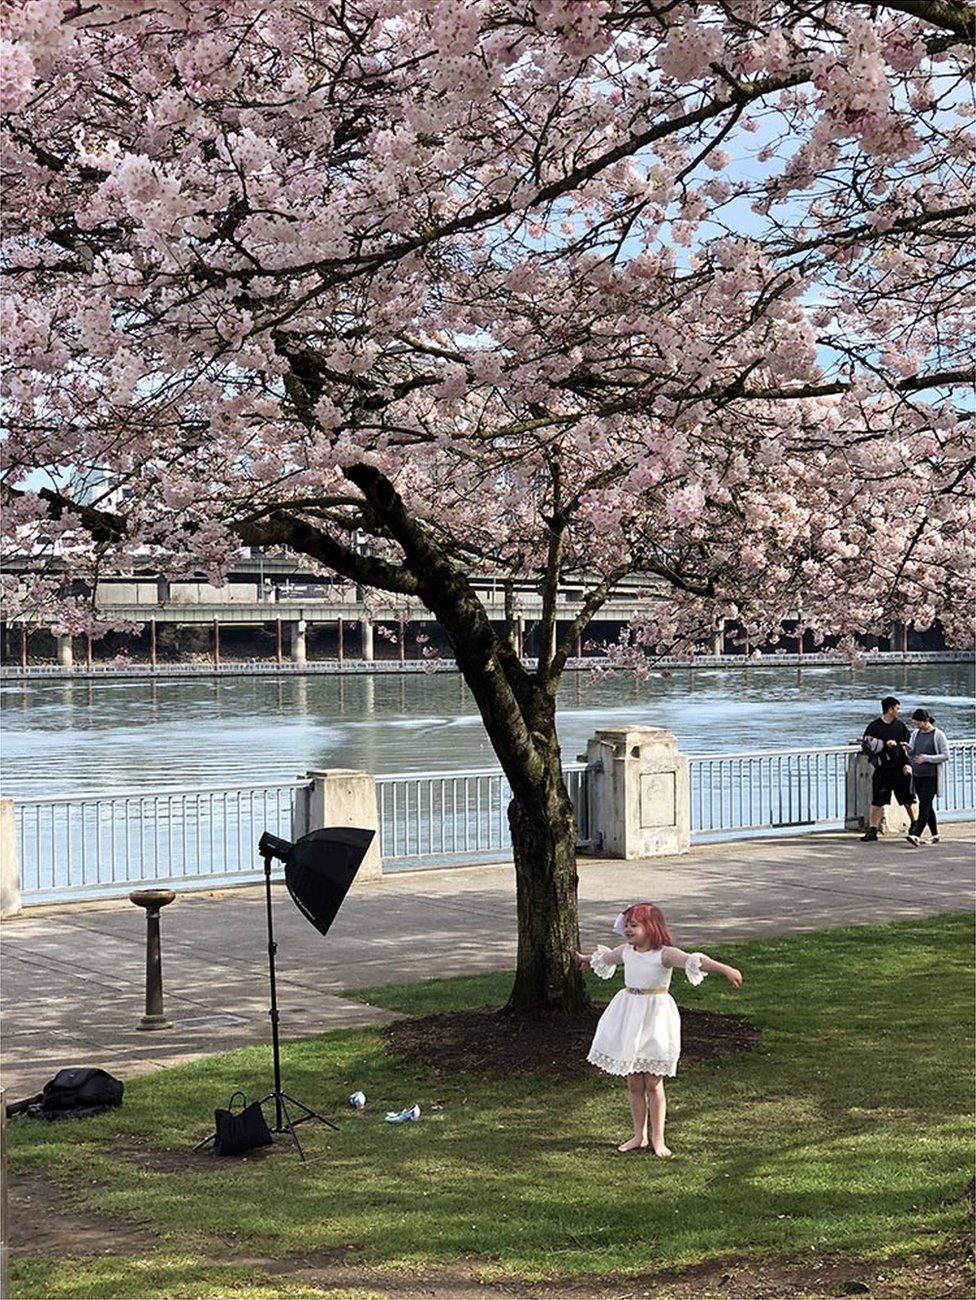 Child under a cherry blossom tree